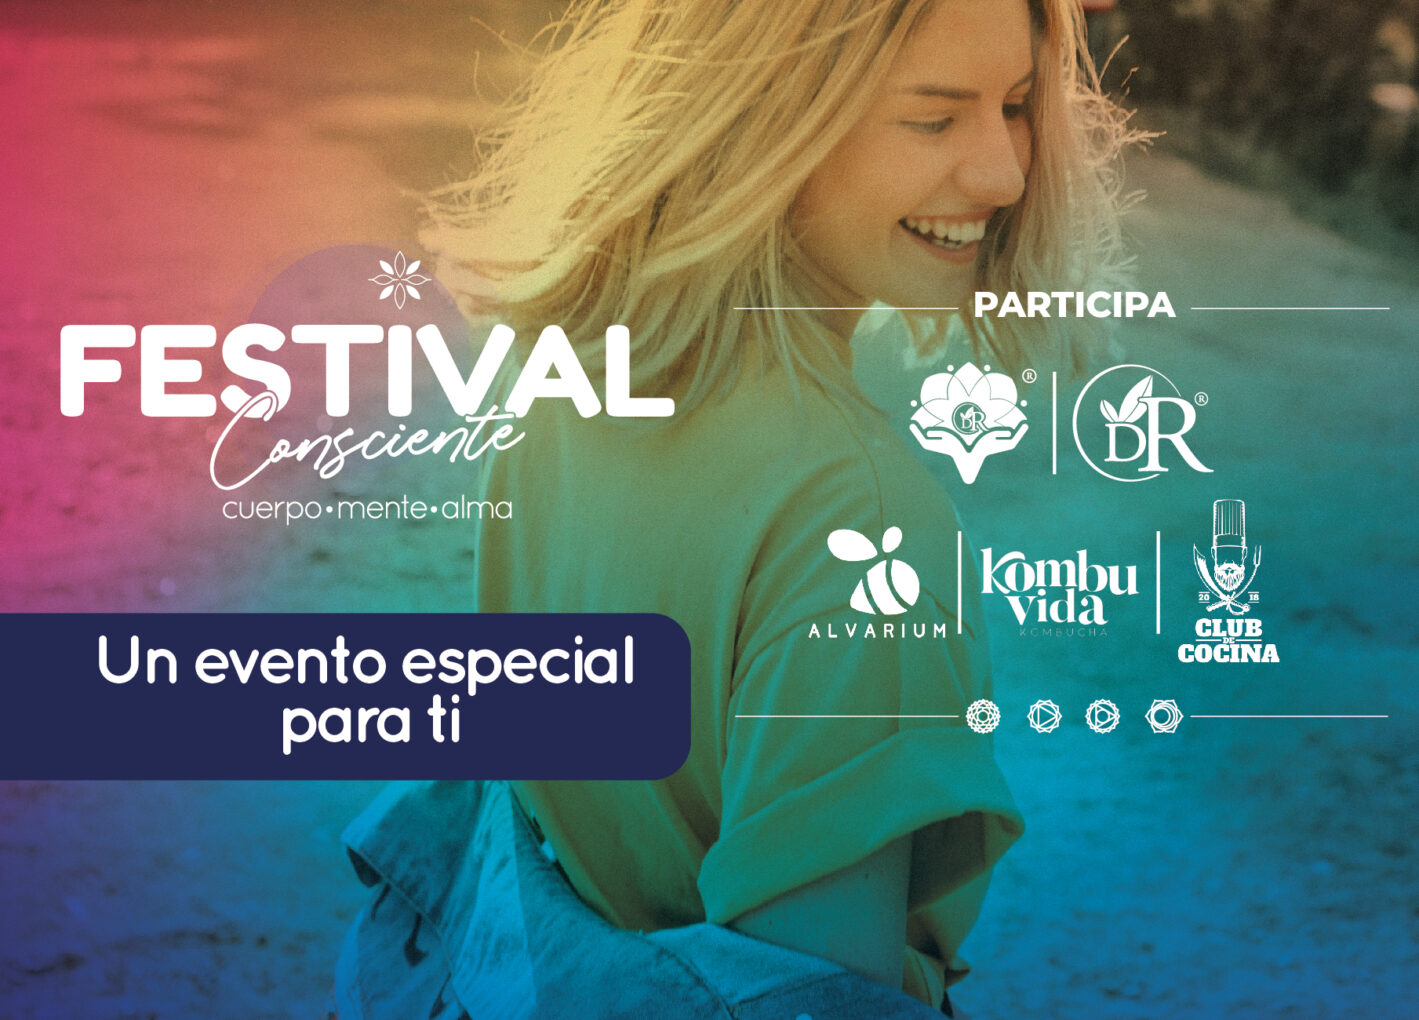 Festival Consciente, un evento especial para ti